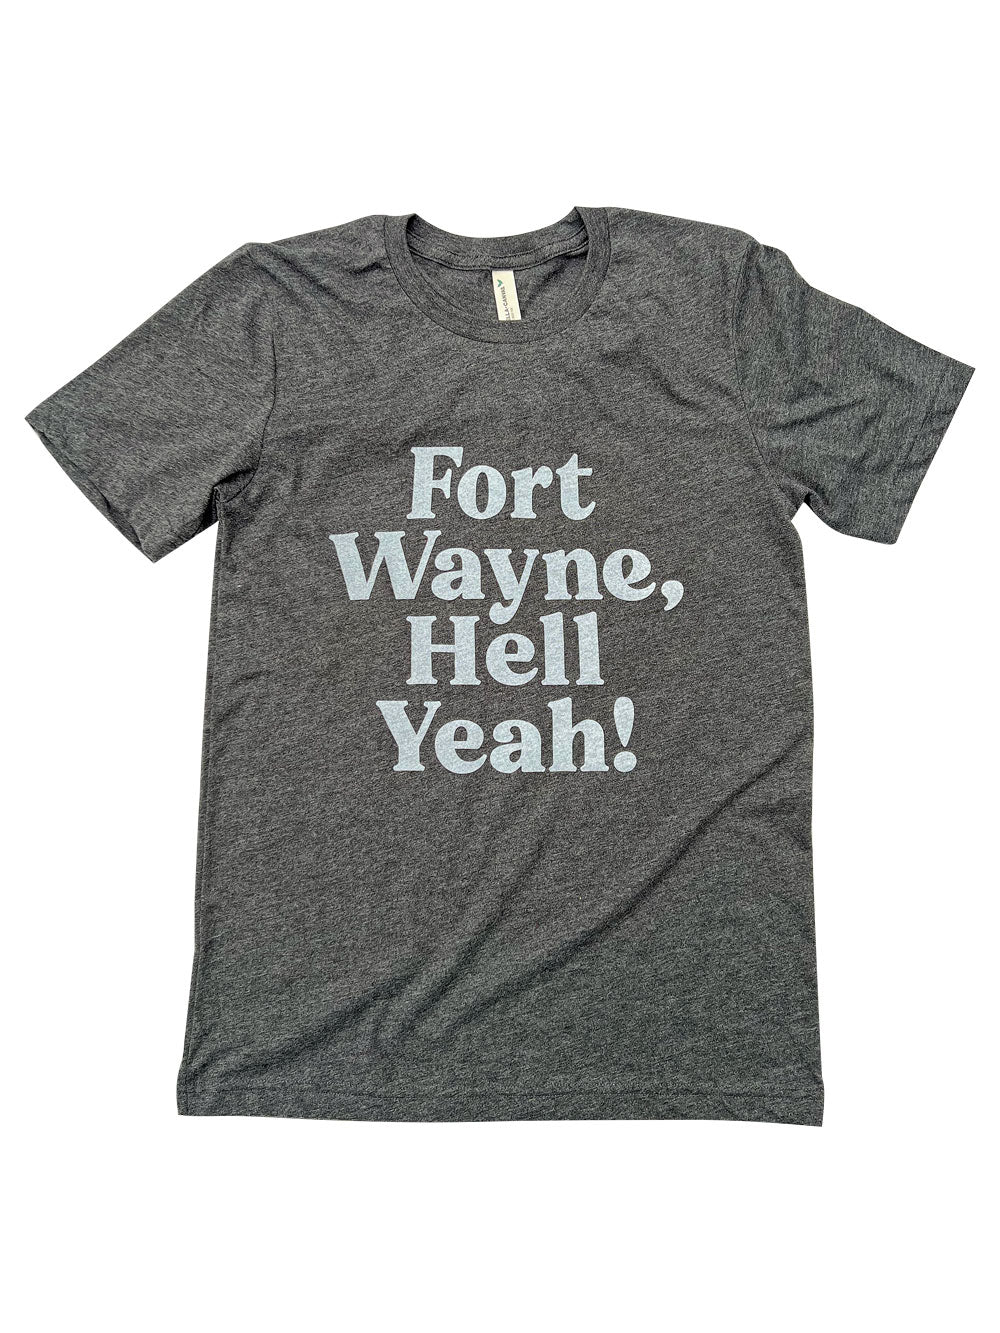 Fort Wayne, Hell Yeah black heather t-shirt